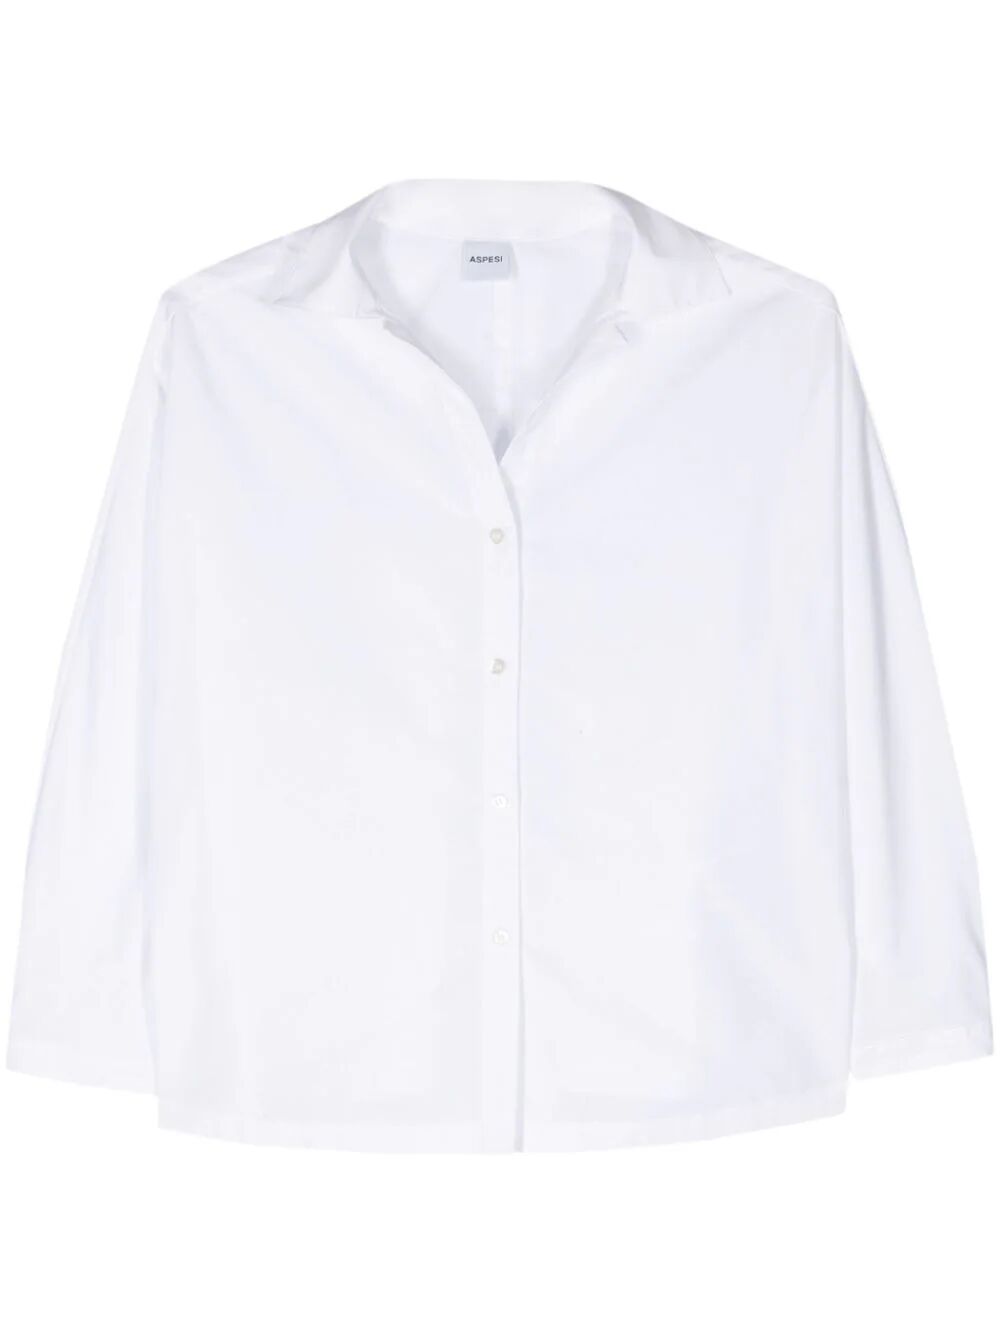 Aspesi Mod 5469 Shirt In White